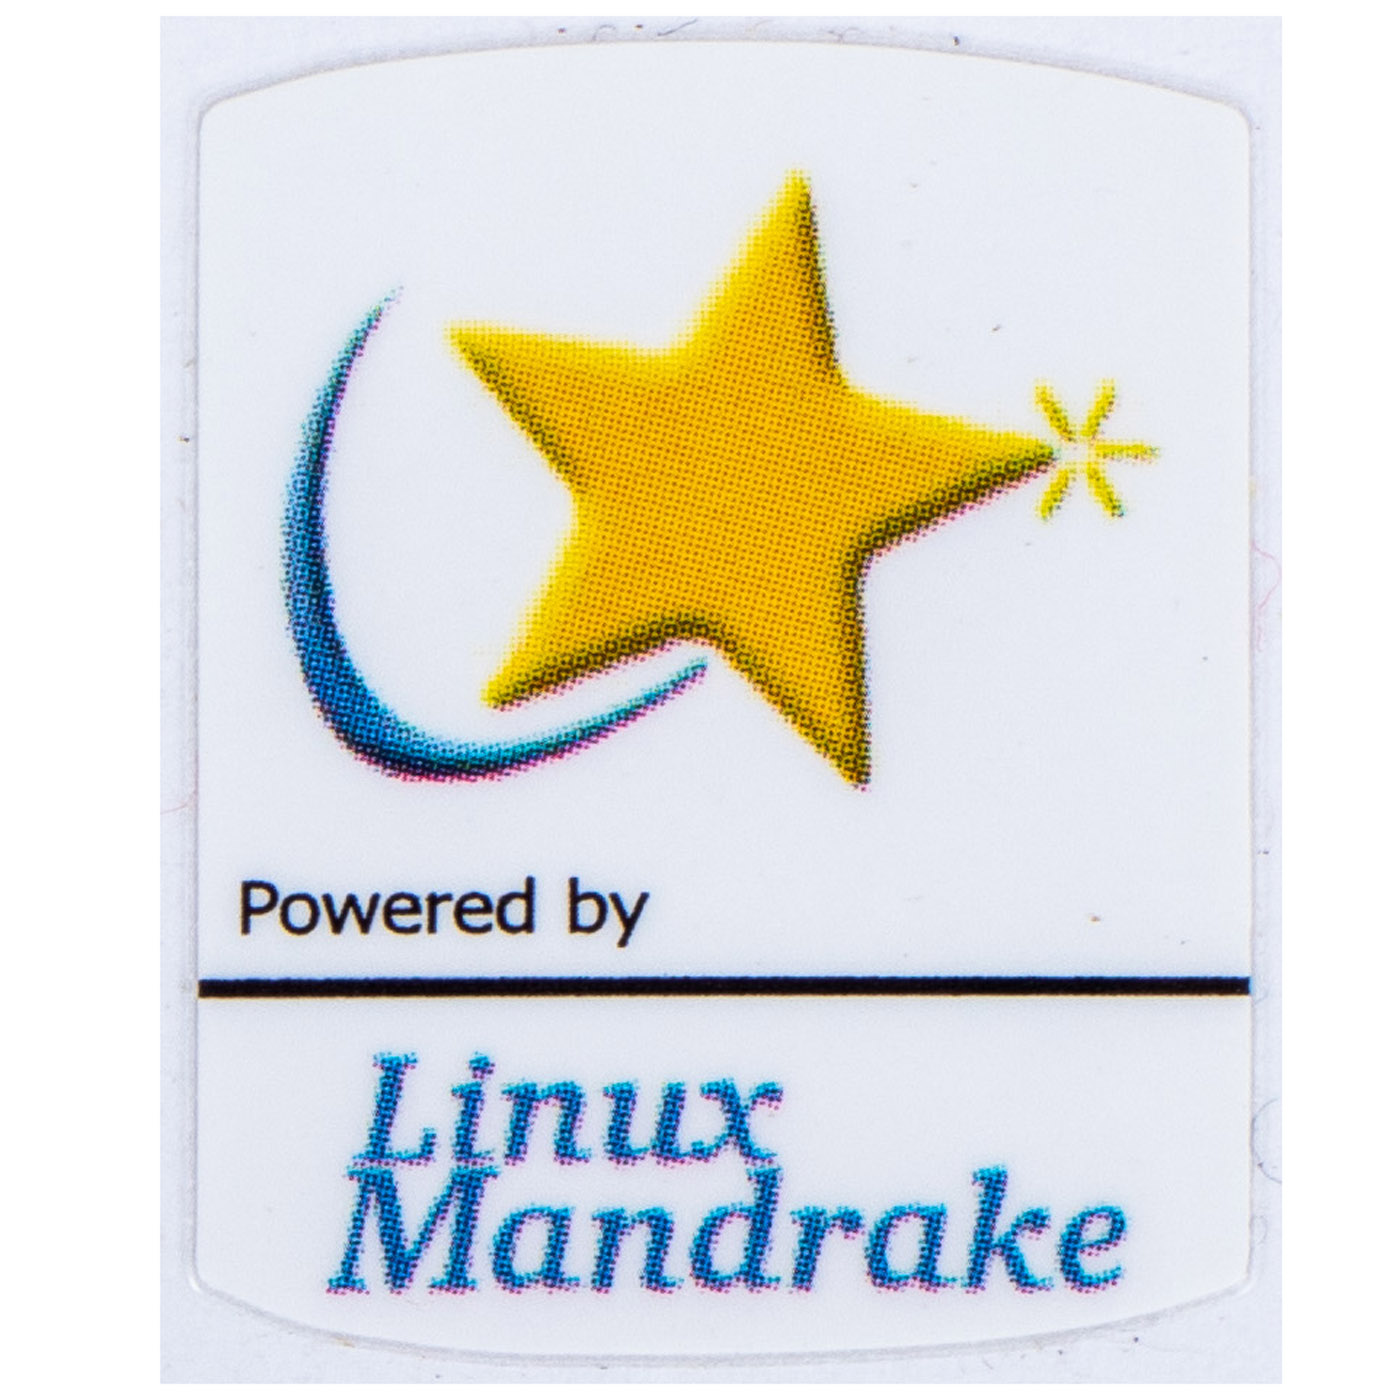 Naklejka Powered by Linux Mandrake 19 x 24 mm